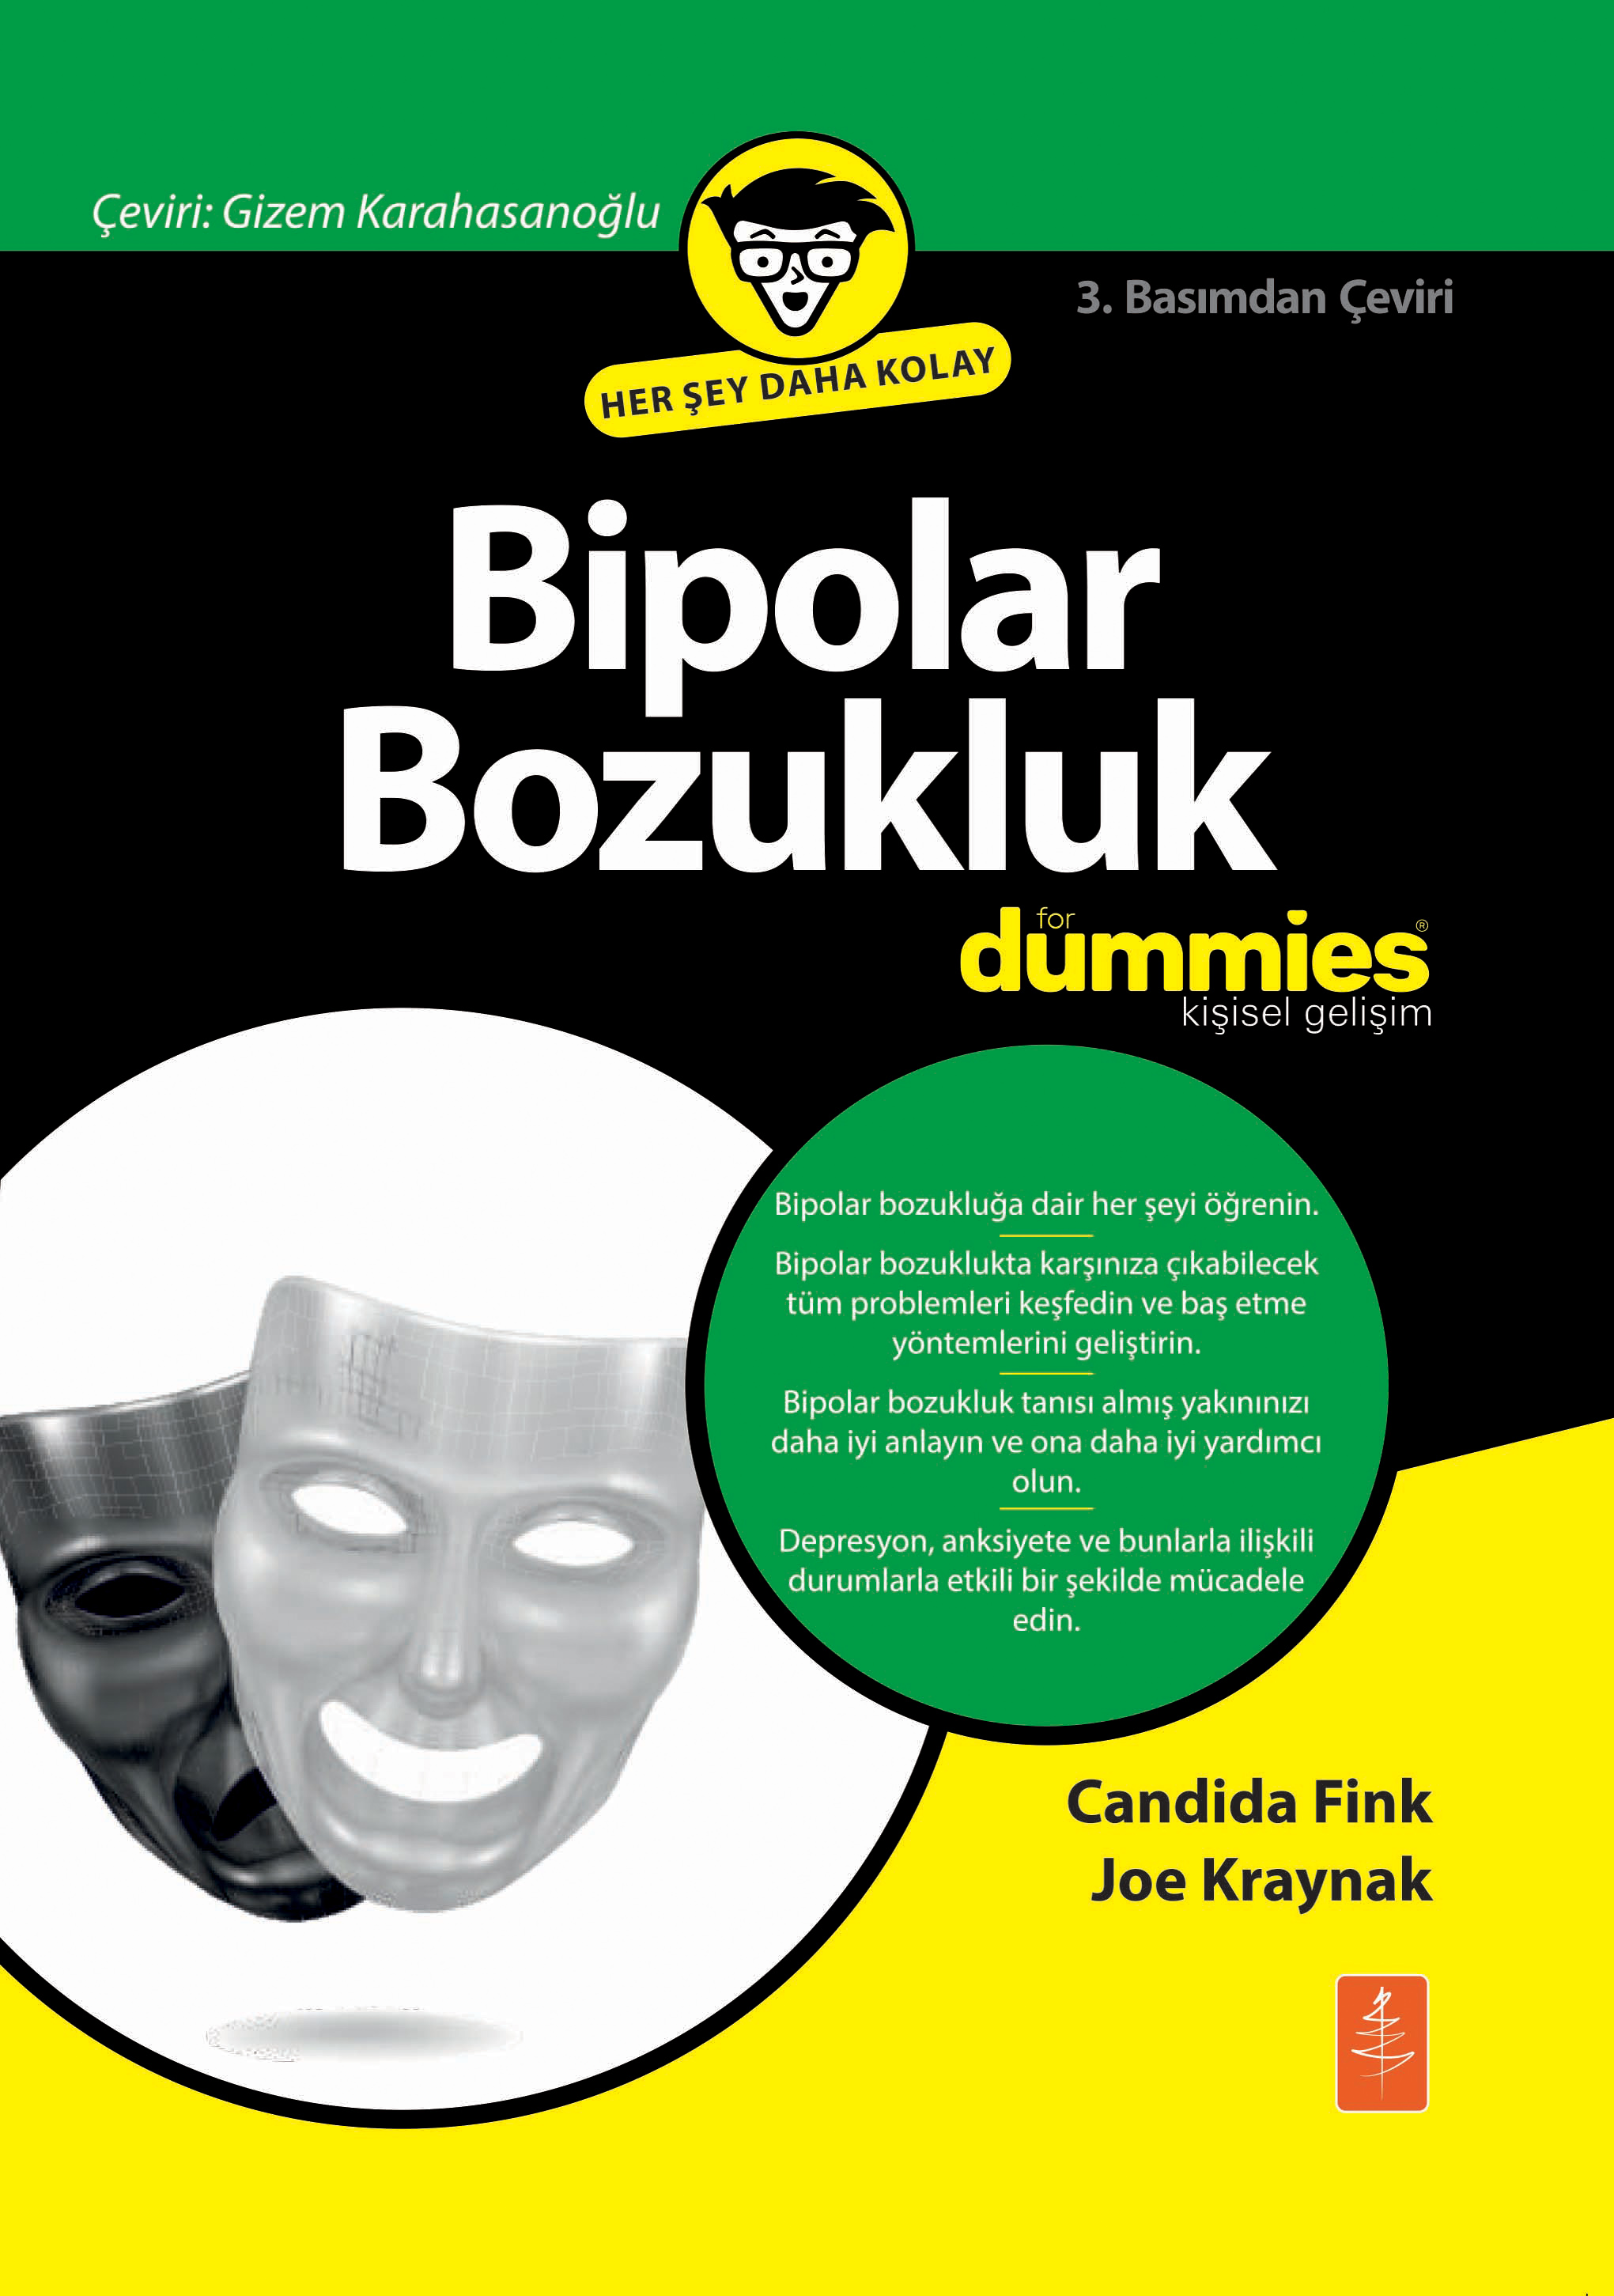 Bipolar Bozukluk for Dummies